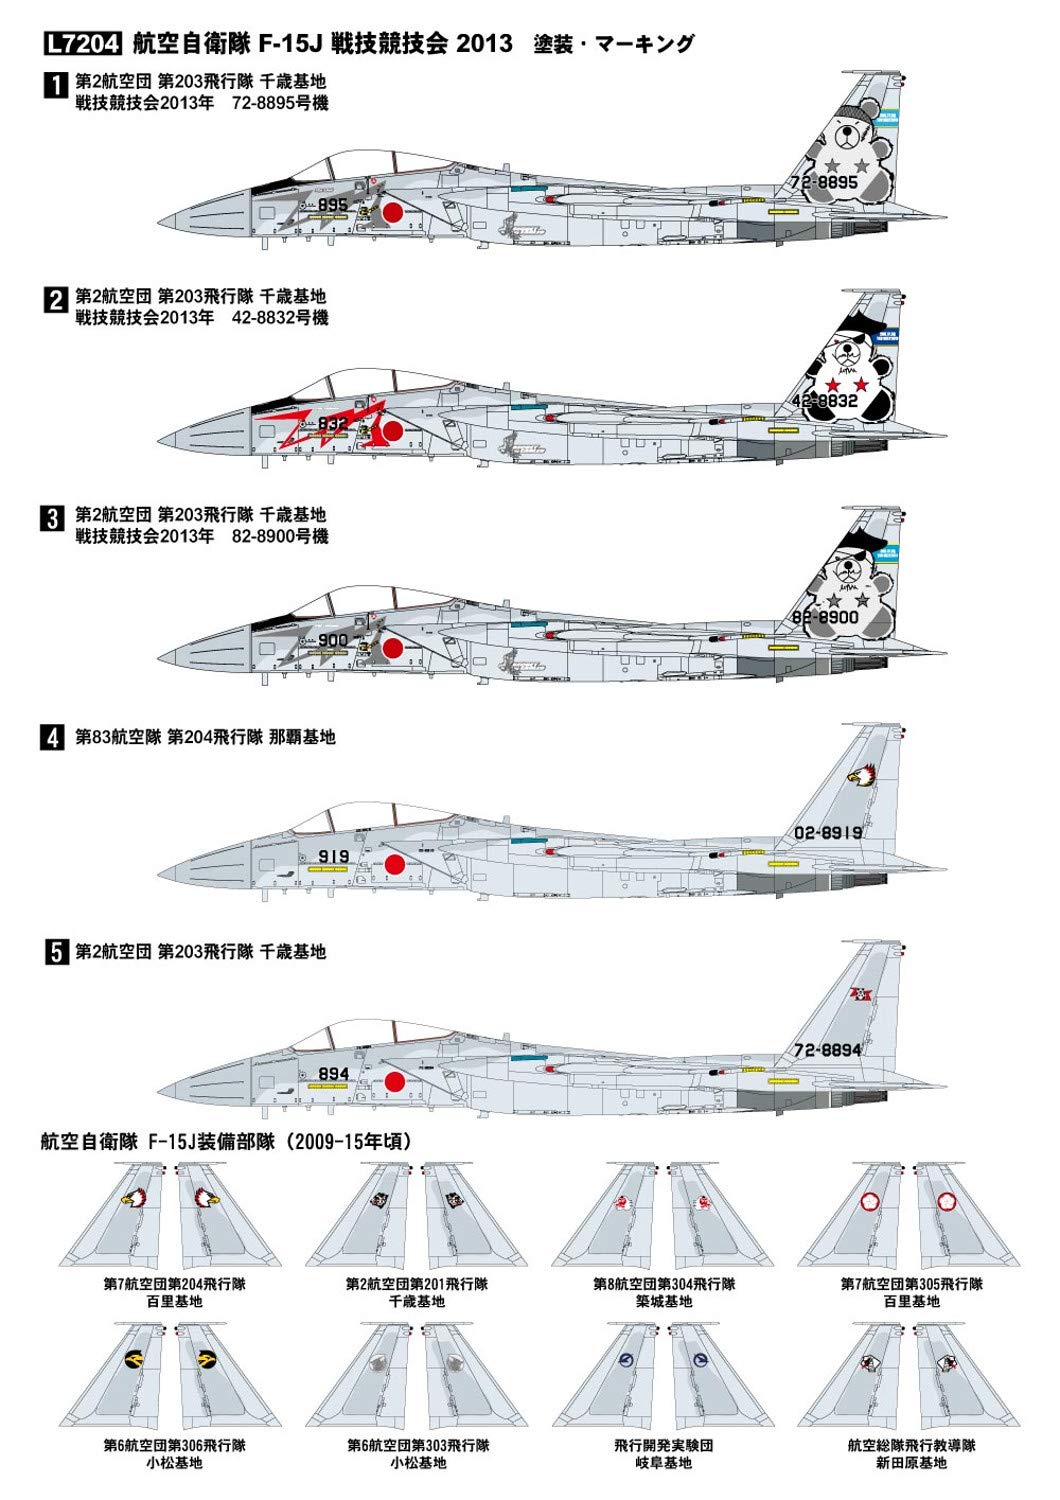 1/72『F-15J 航空自衛隊 戦技競技会 2013』プラモデル-003